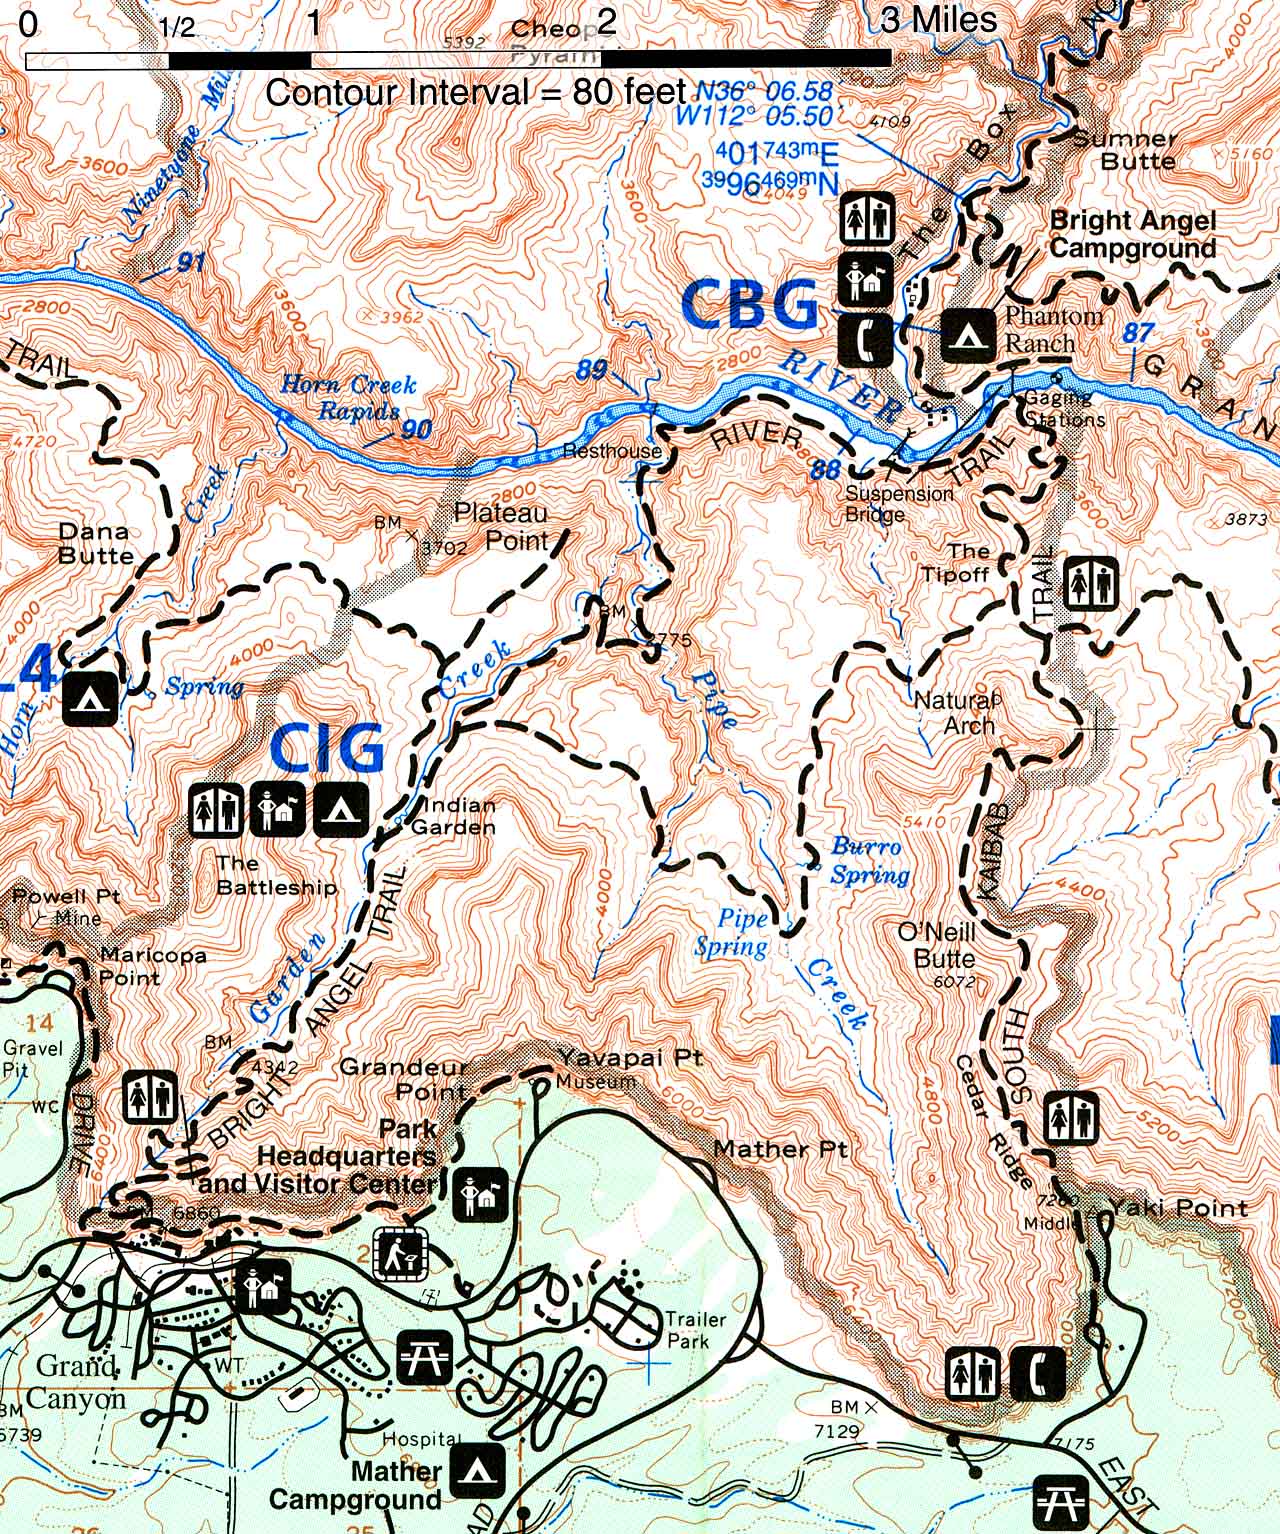 Grand Canyon National Park Map - Hiking